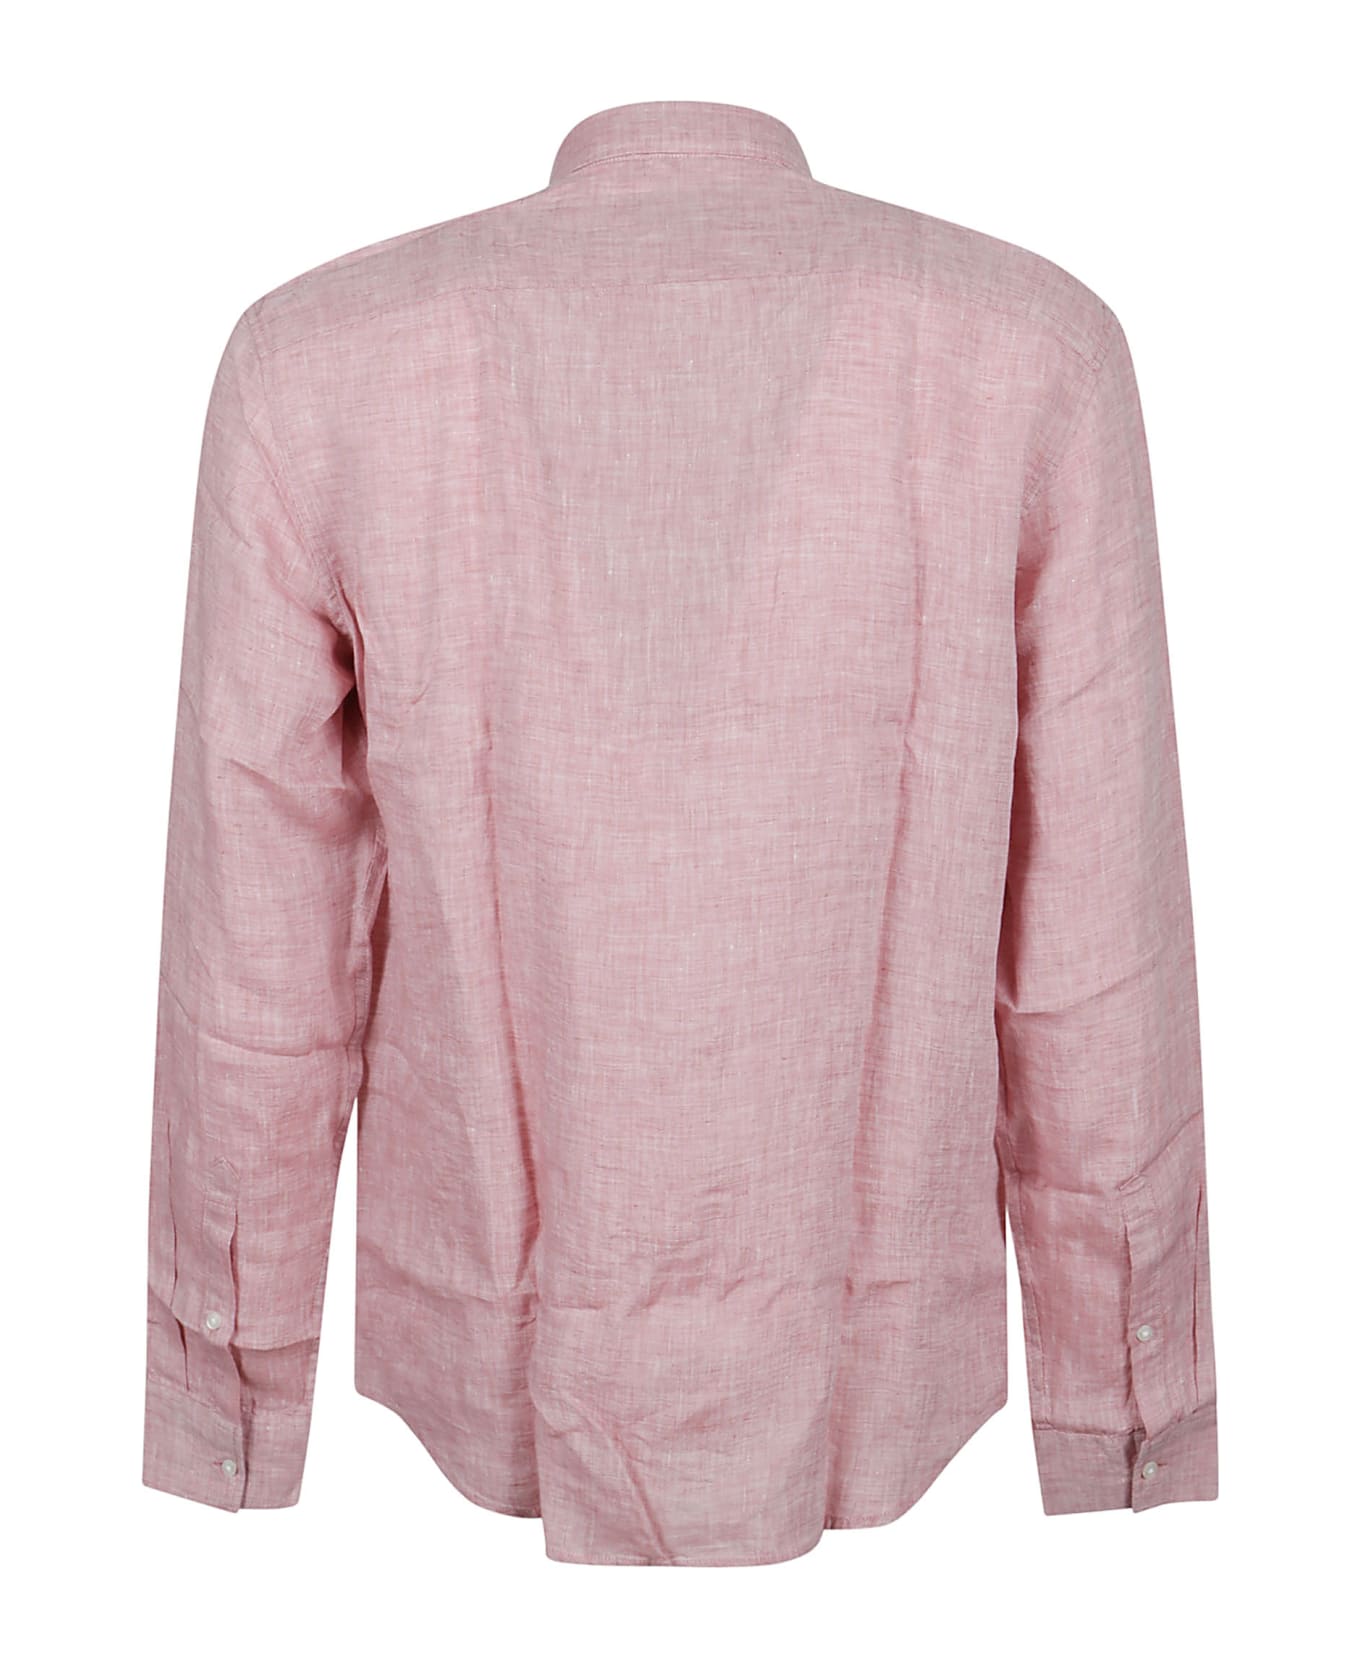 Michael Kors Long Sleeve Slim Shirt - Dusty Rose